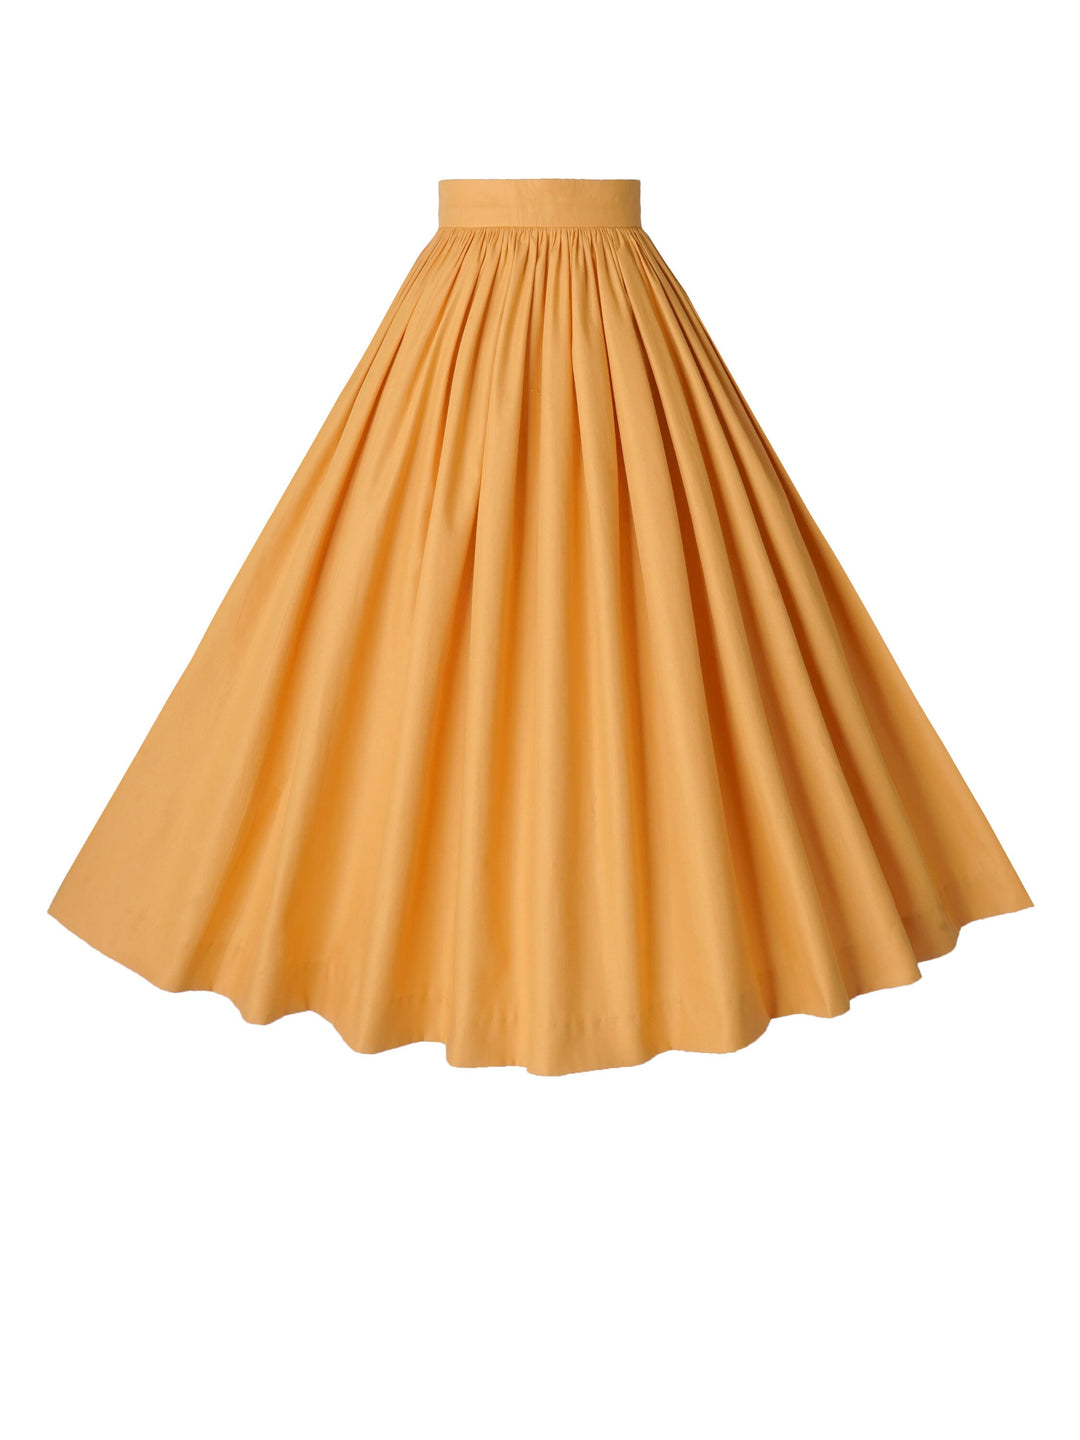 RTS - SIZE S - Lola Skirt in Mustard Yellow Cotton